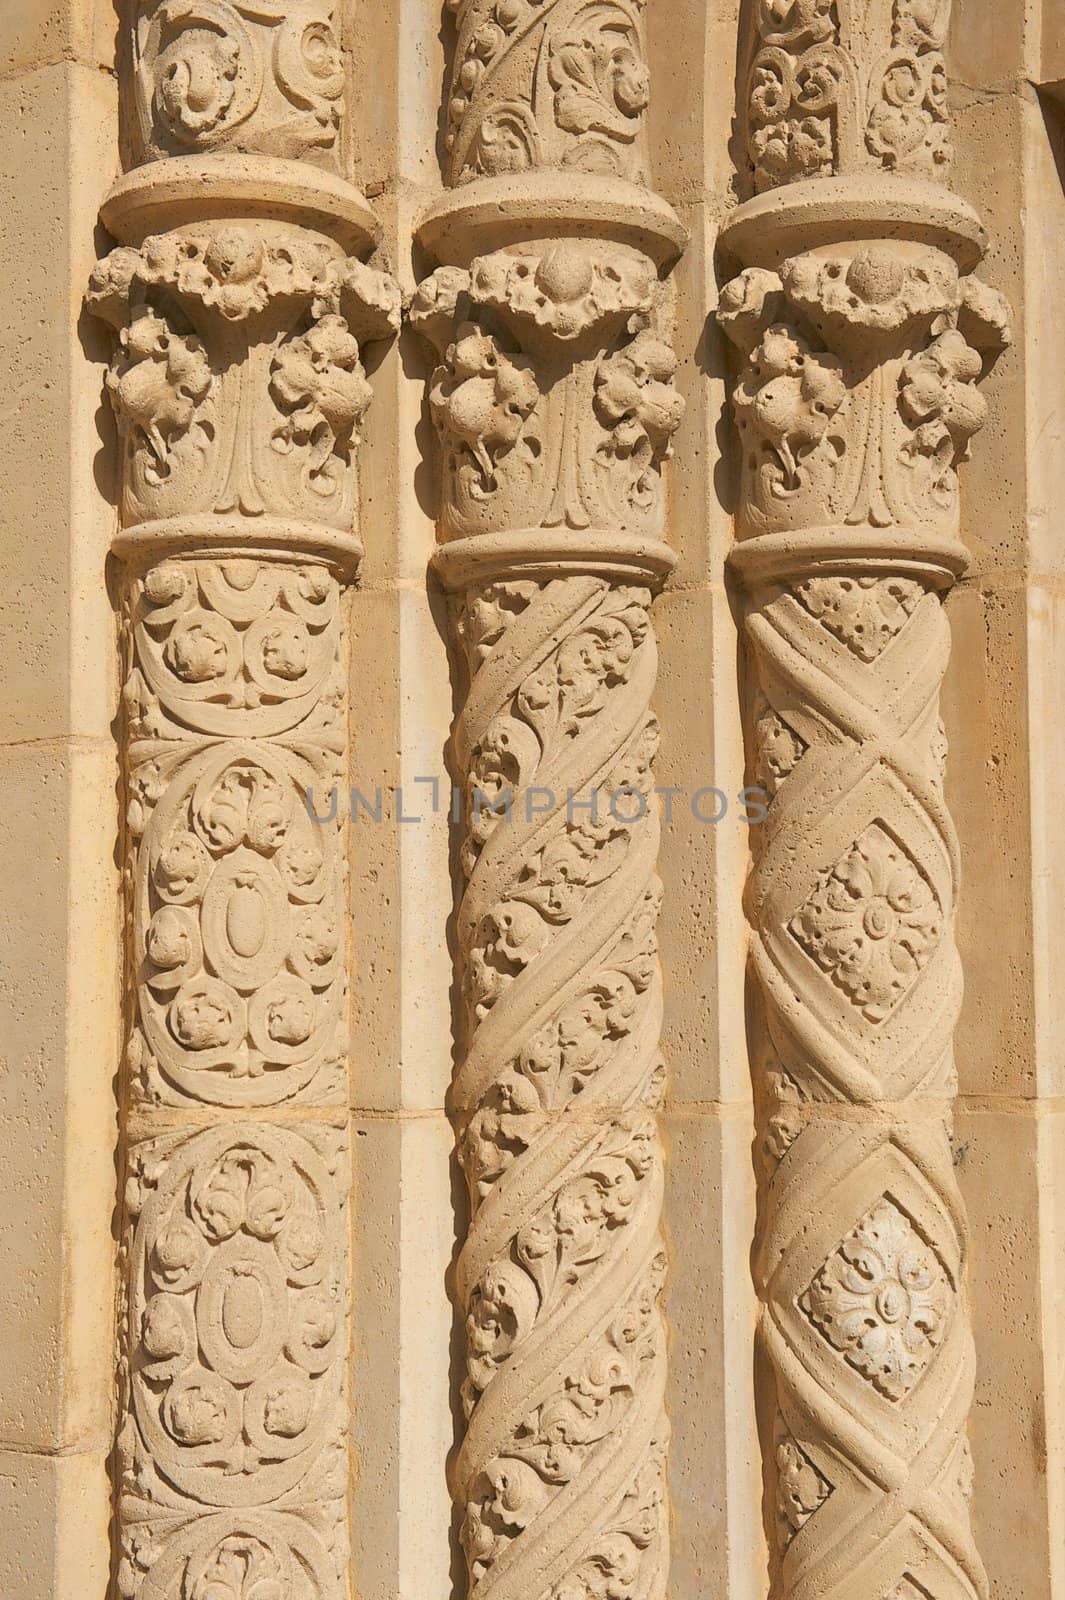 Three Ornate Circular Pillars Made of Stucco by pixelsnap